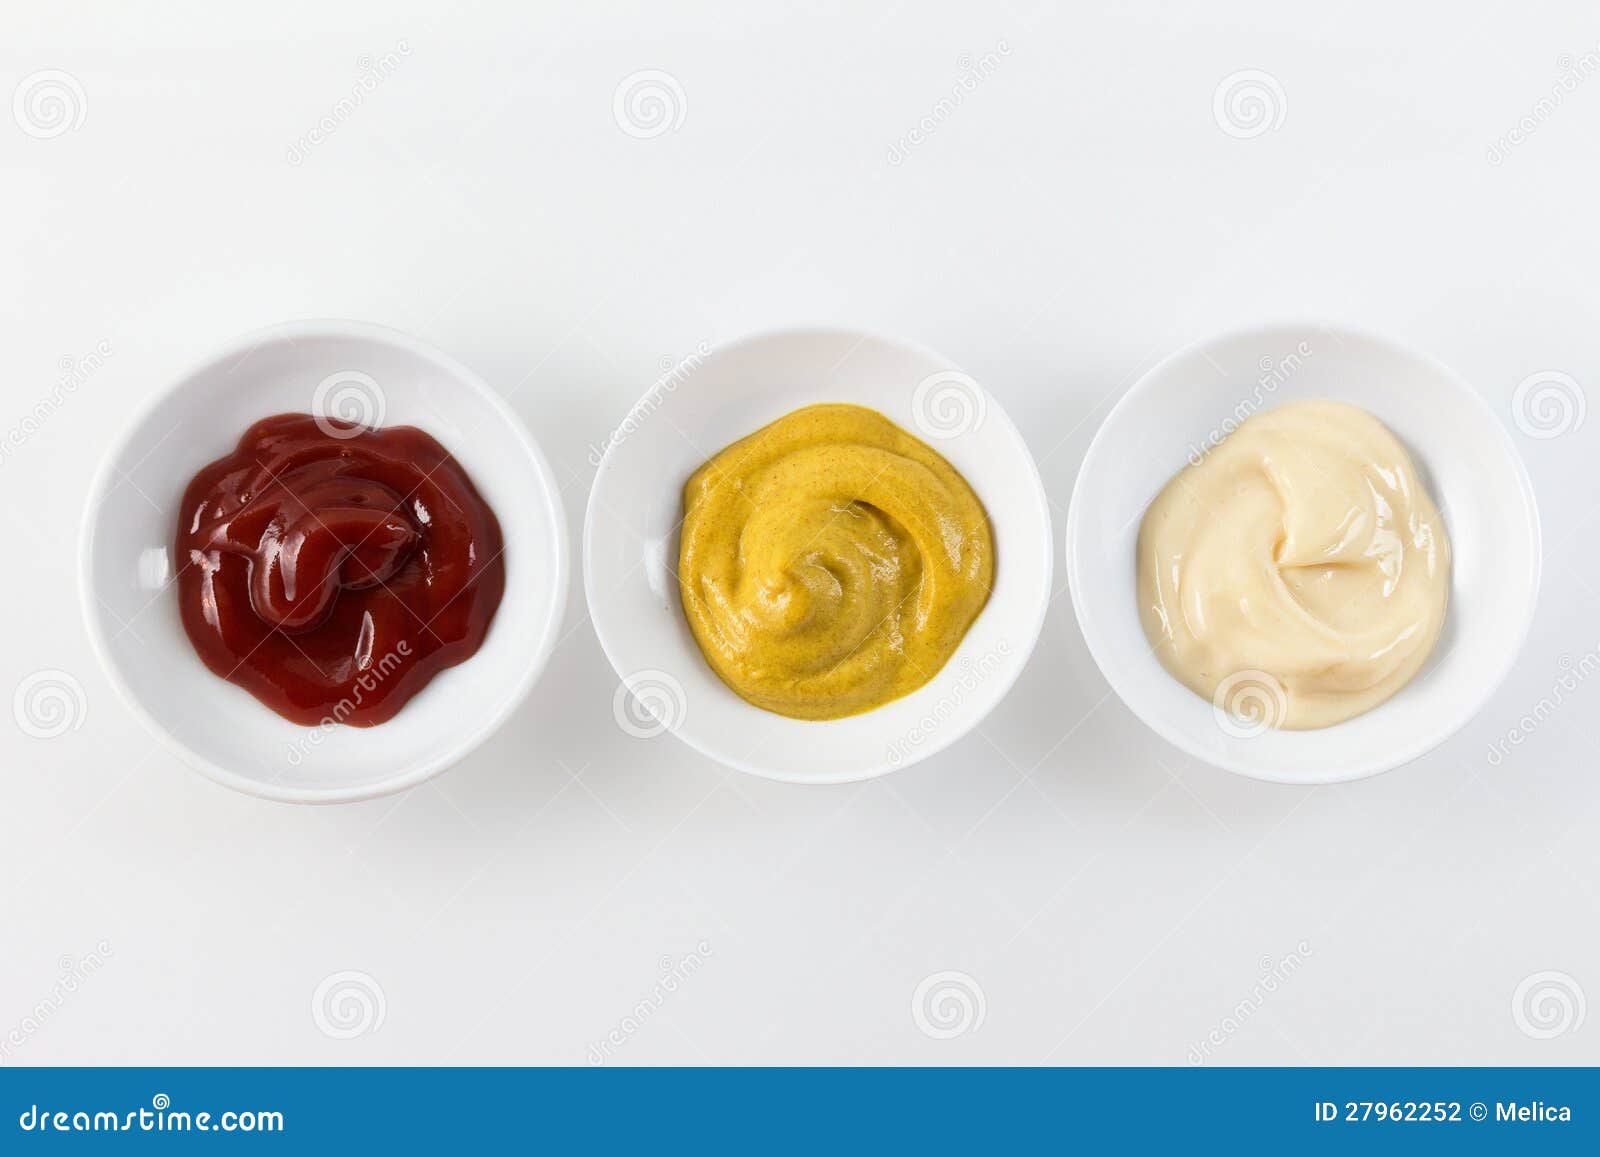 three condiment bowls